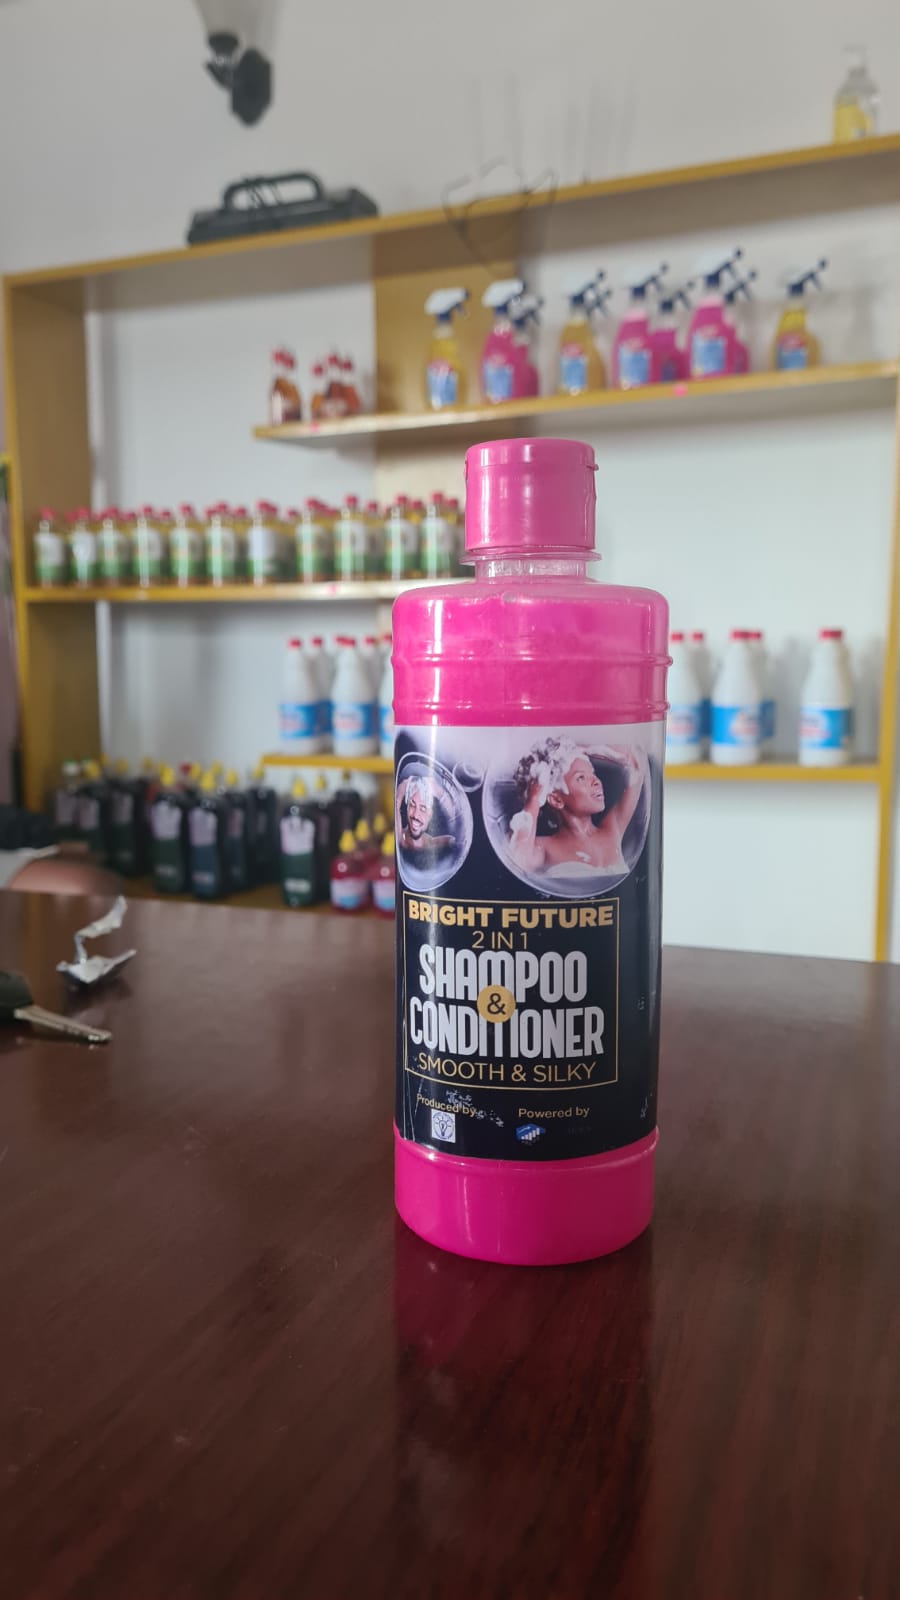 Shampoo Conditioner 2,500frs